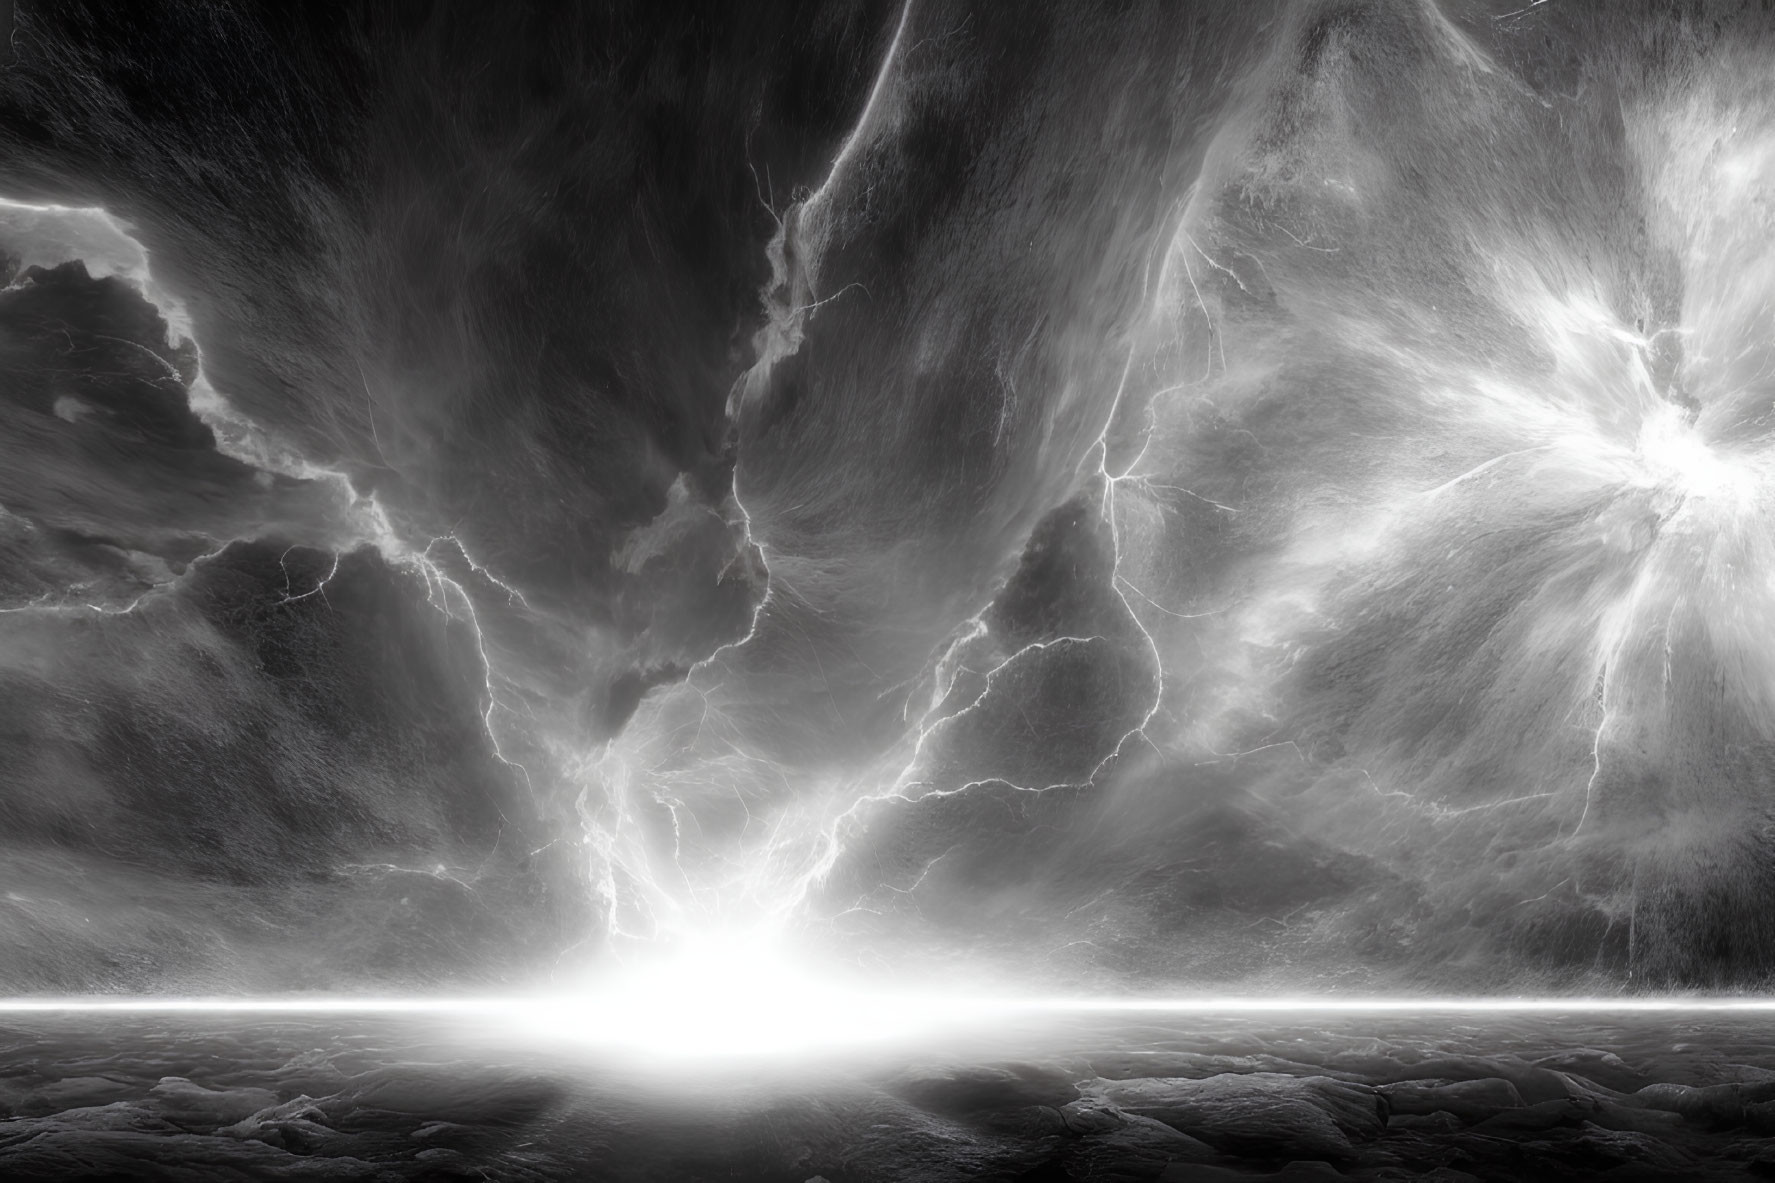 Monochrome image of lightning striking barren landscape